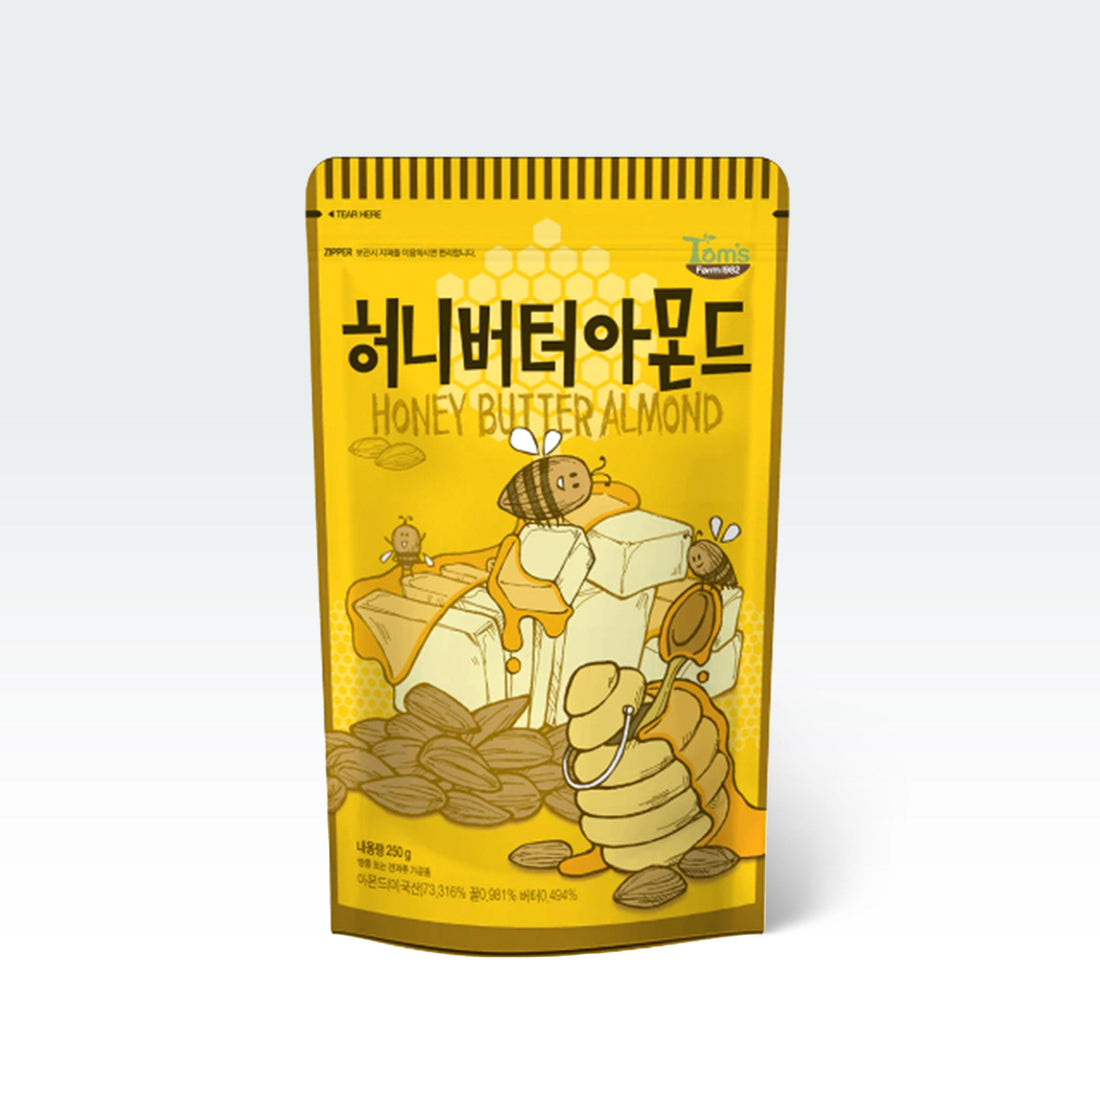 Gilim Honey Butter Almond 8.81oz(250g) - Anytime Basket